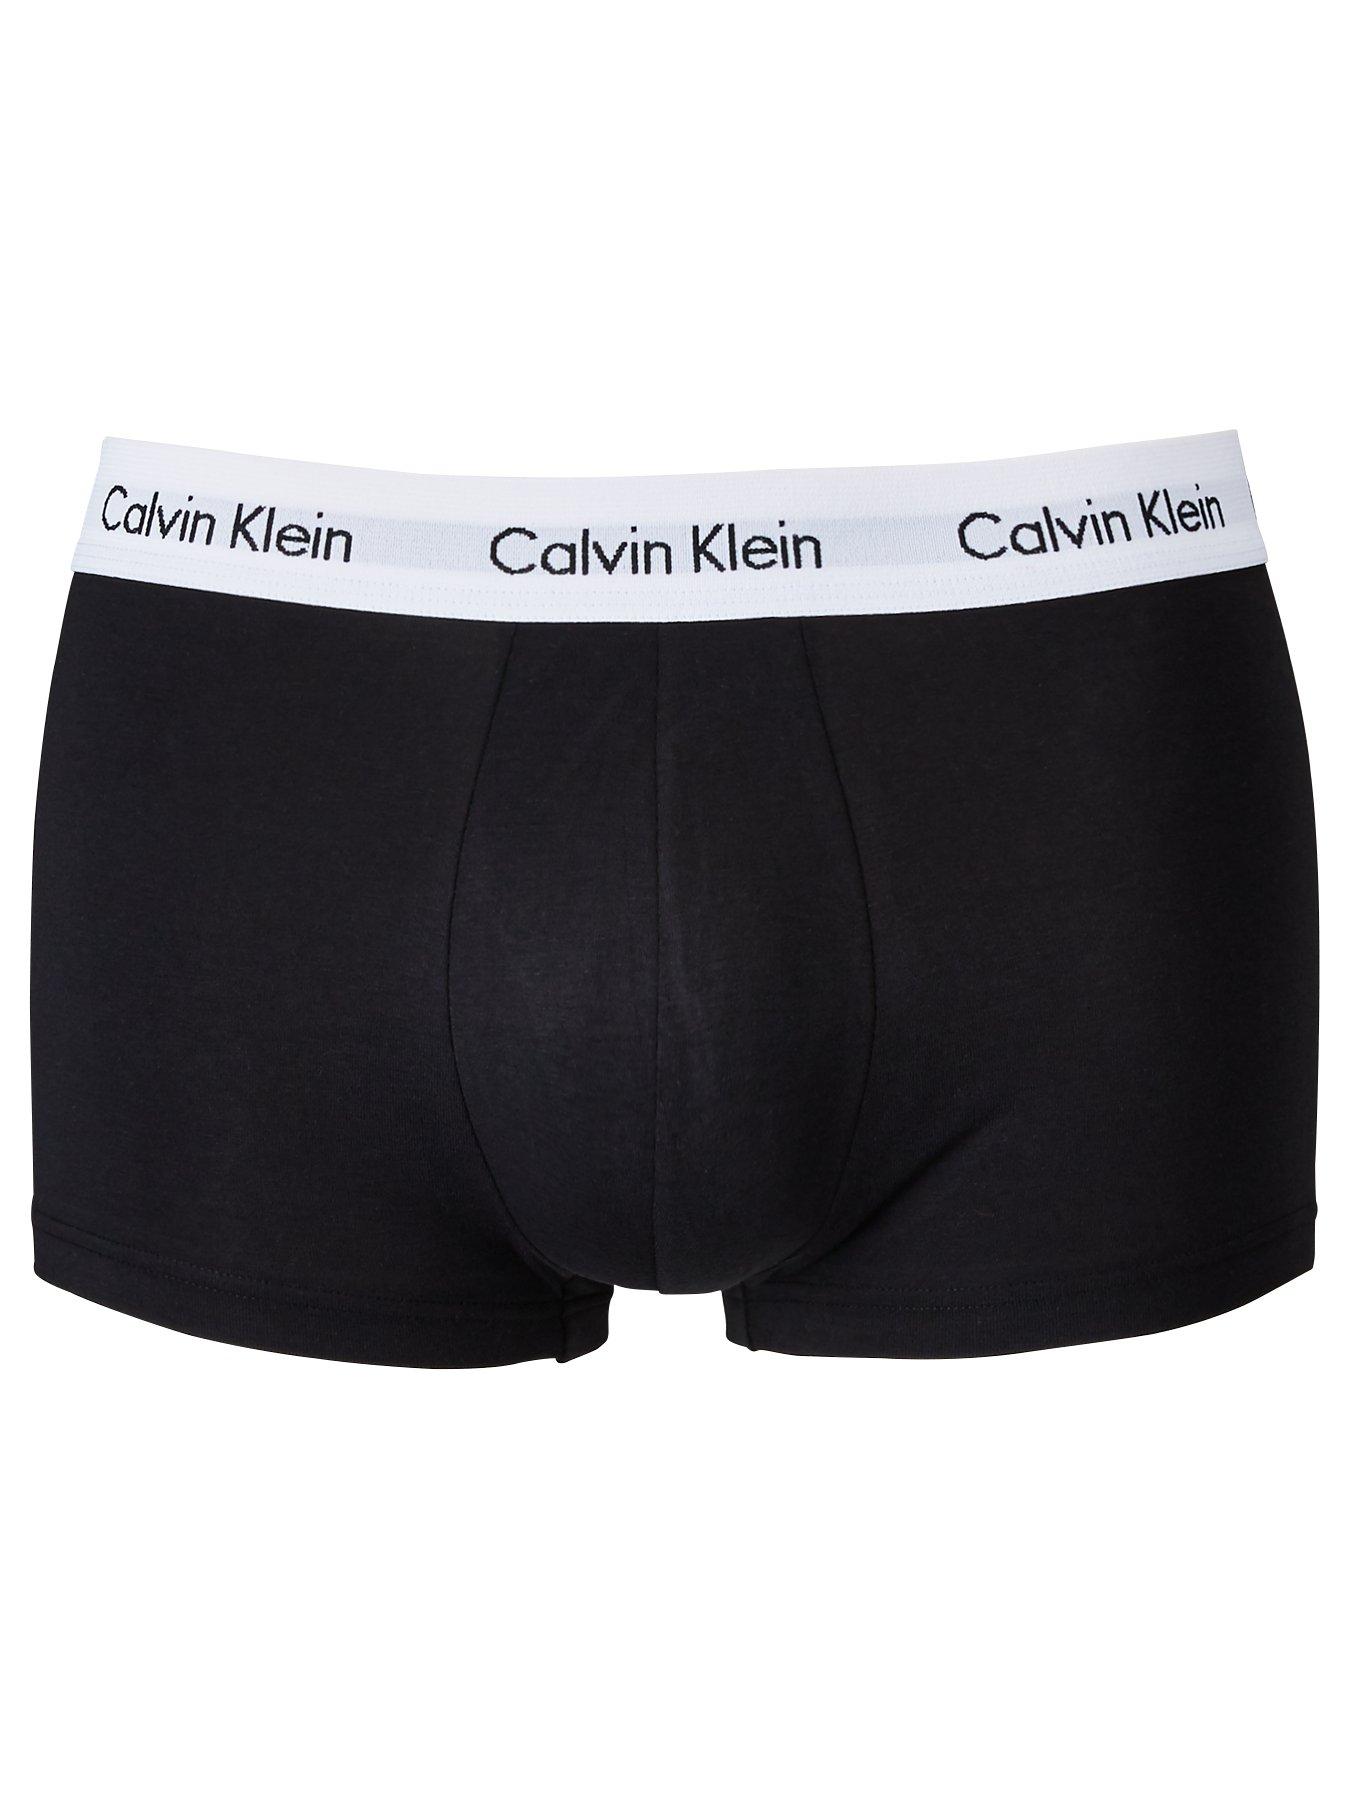 Calvin Klein 3 Pack Low Rise Trunks - Multi | very.co.uk